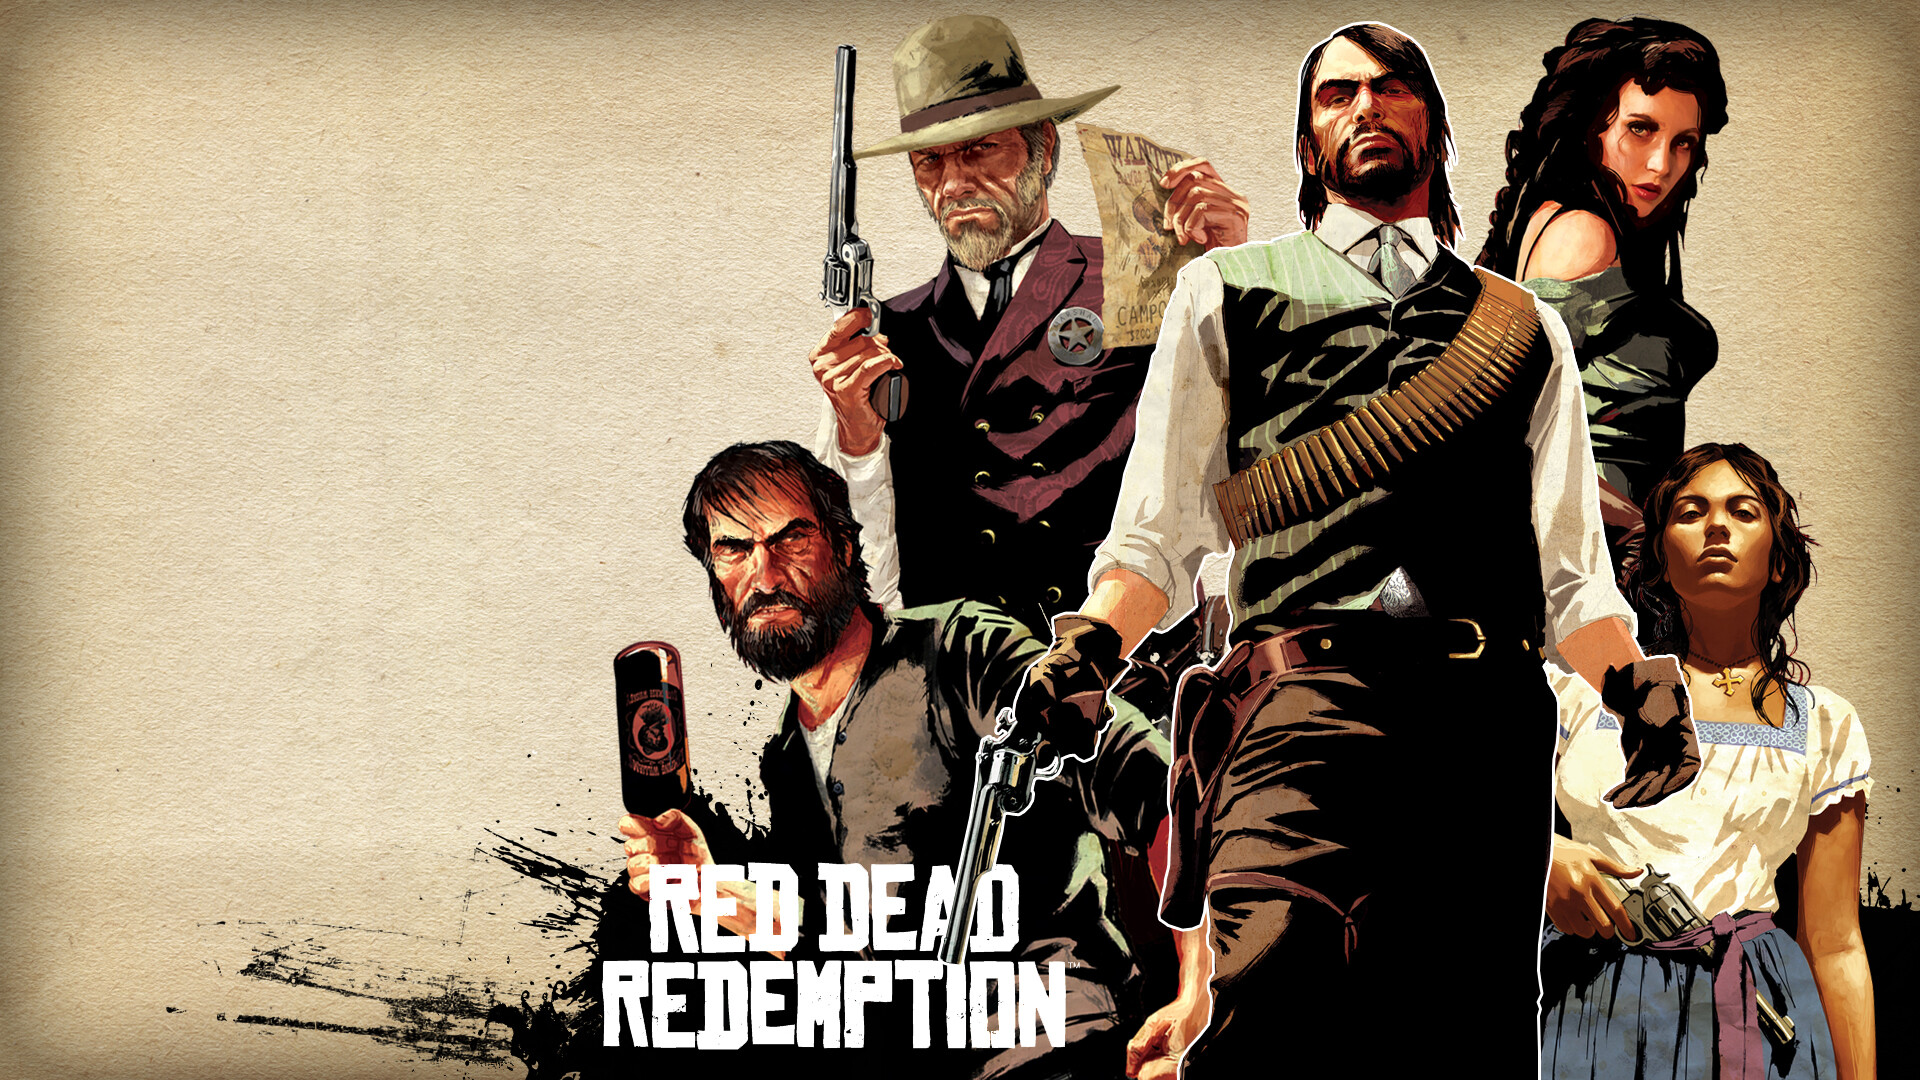 Red Dead Redemption: John Marston, Bill Williamson, Leigh Johnson, Abigail Marston. 1920x1080 Full HD Wallpaper.